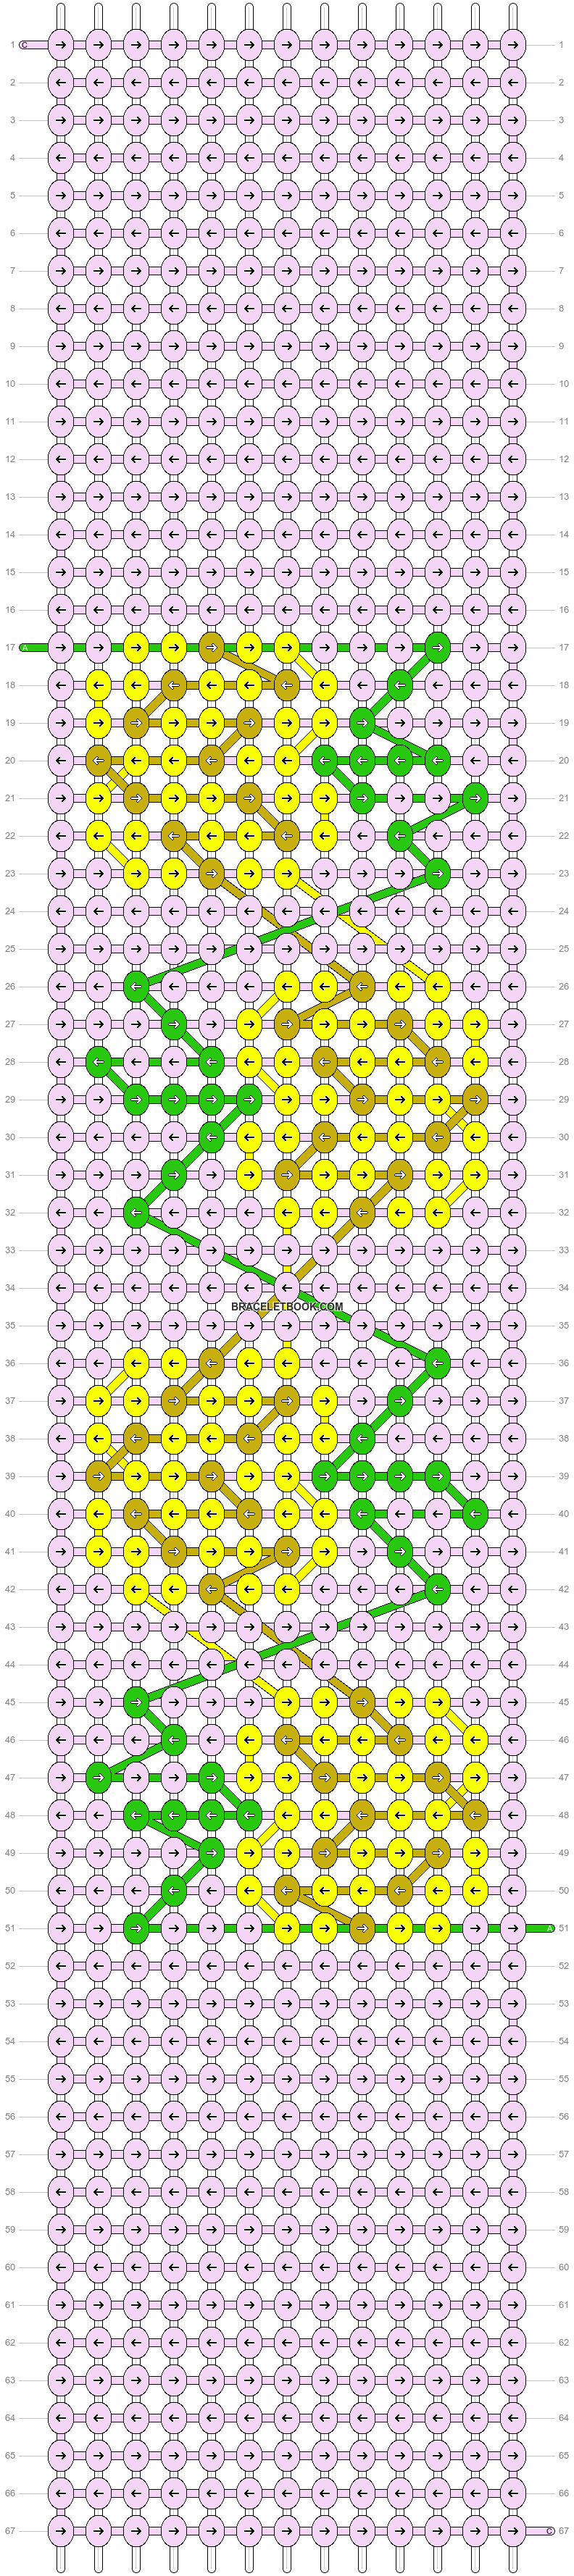 Alpha pattern #41506 pattern